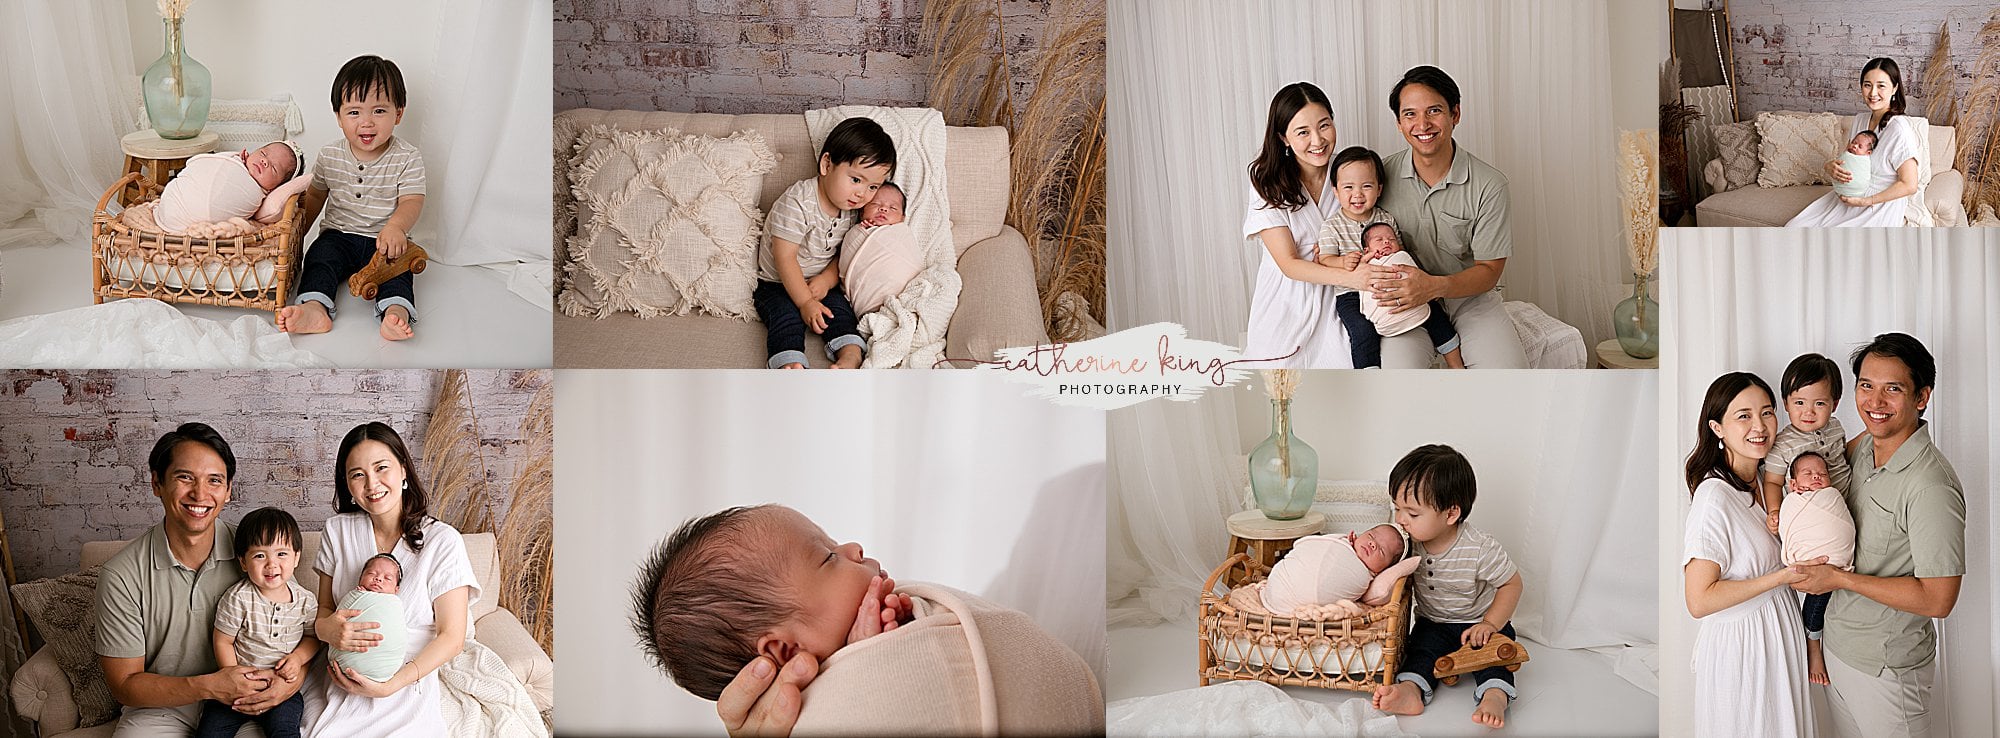 family photos newborn photographer in ct